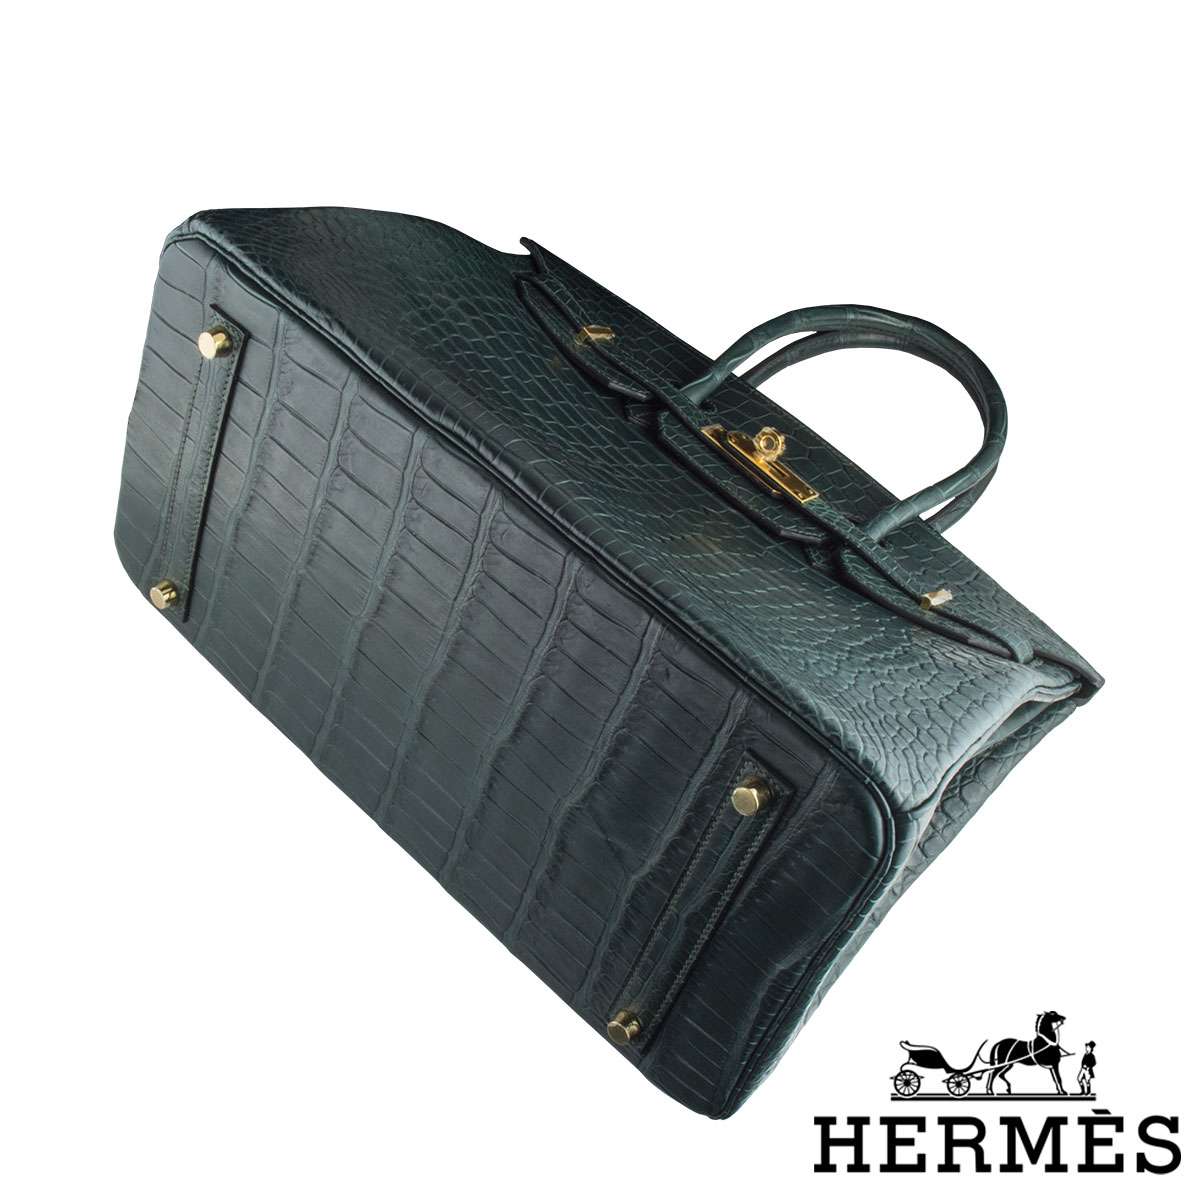 How to Spot Hermes Exotic Bags（3）-Porosus Crocodile Bag : r